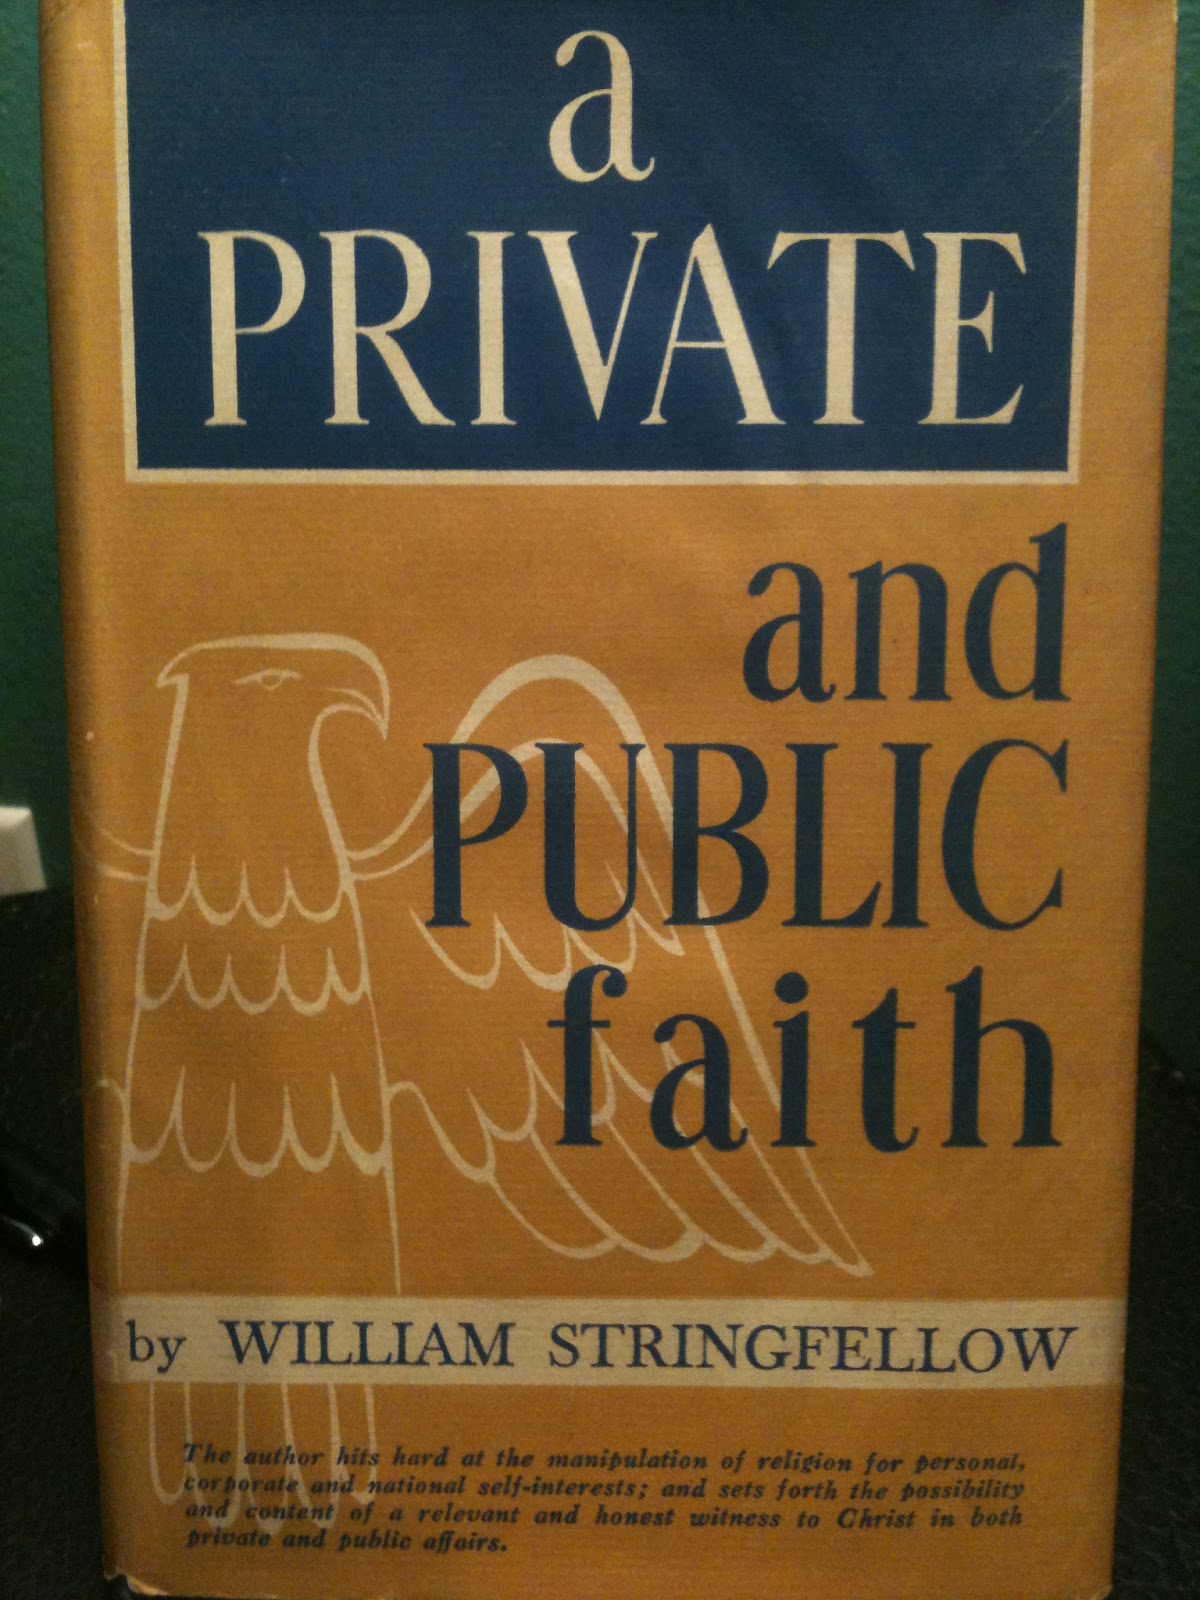 A Private and Public Faith William Stringfellow